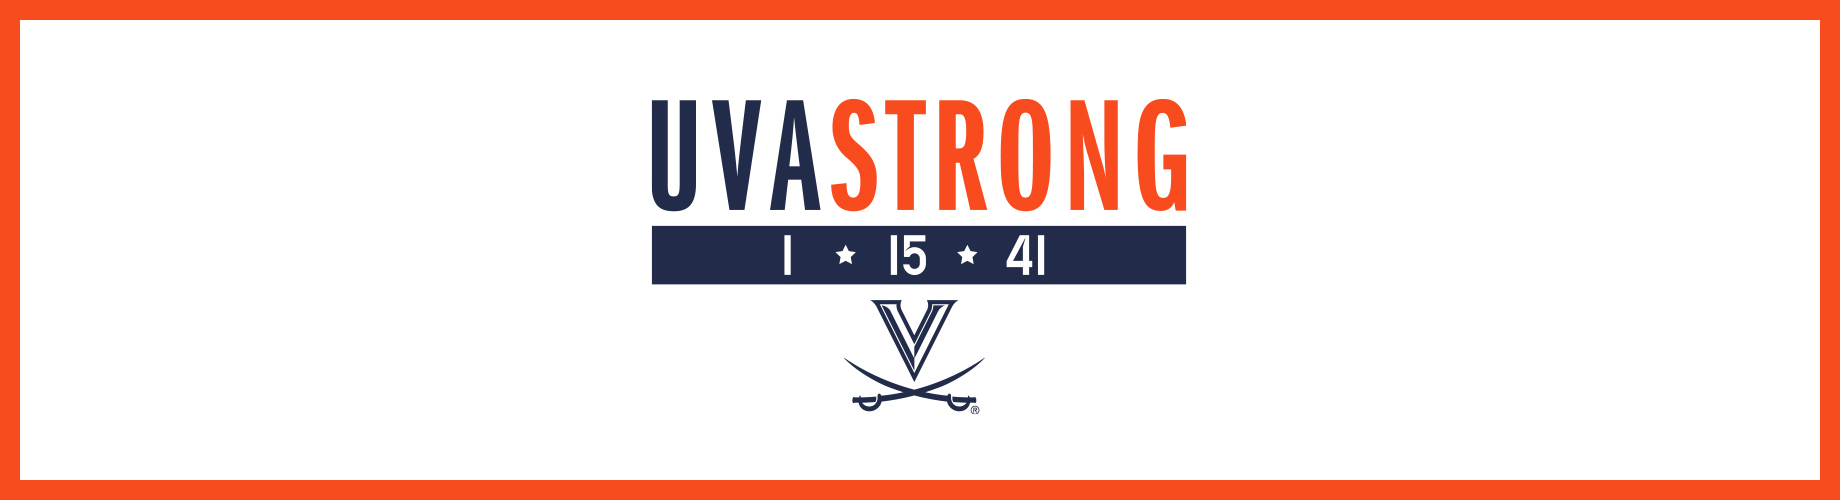 UVA Strong | 1 • 15 • 41